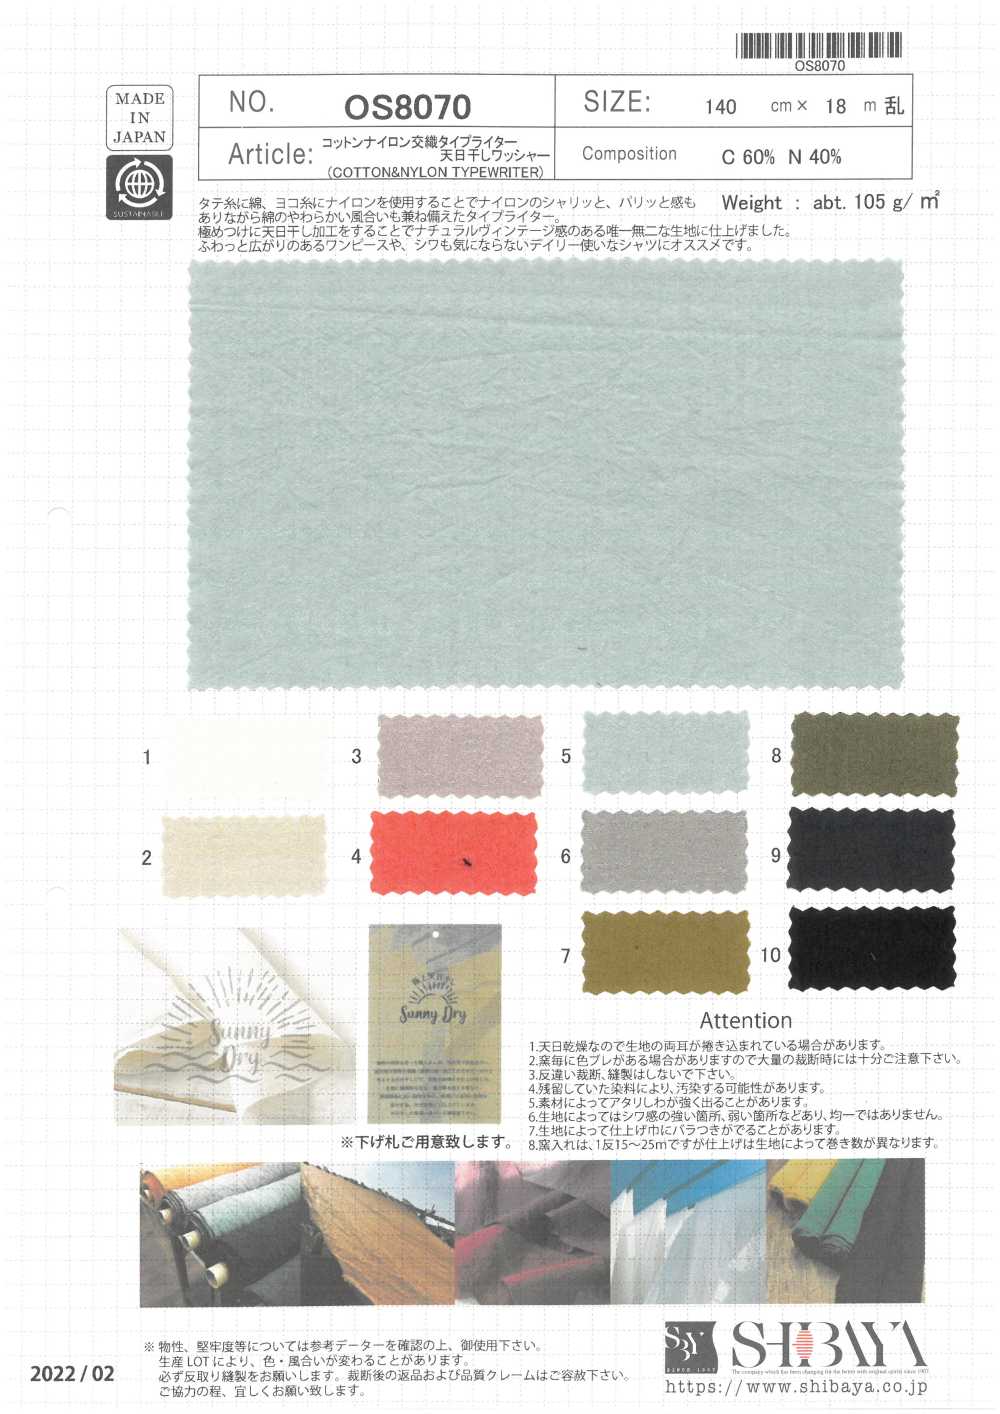 OS8070 Cotton / Nylon Mixed Woven Typewritter Cloth Sun-dried Washer Processing[Textile / Fabric] SHIBAYA